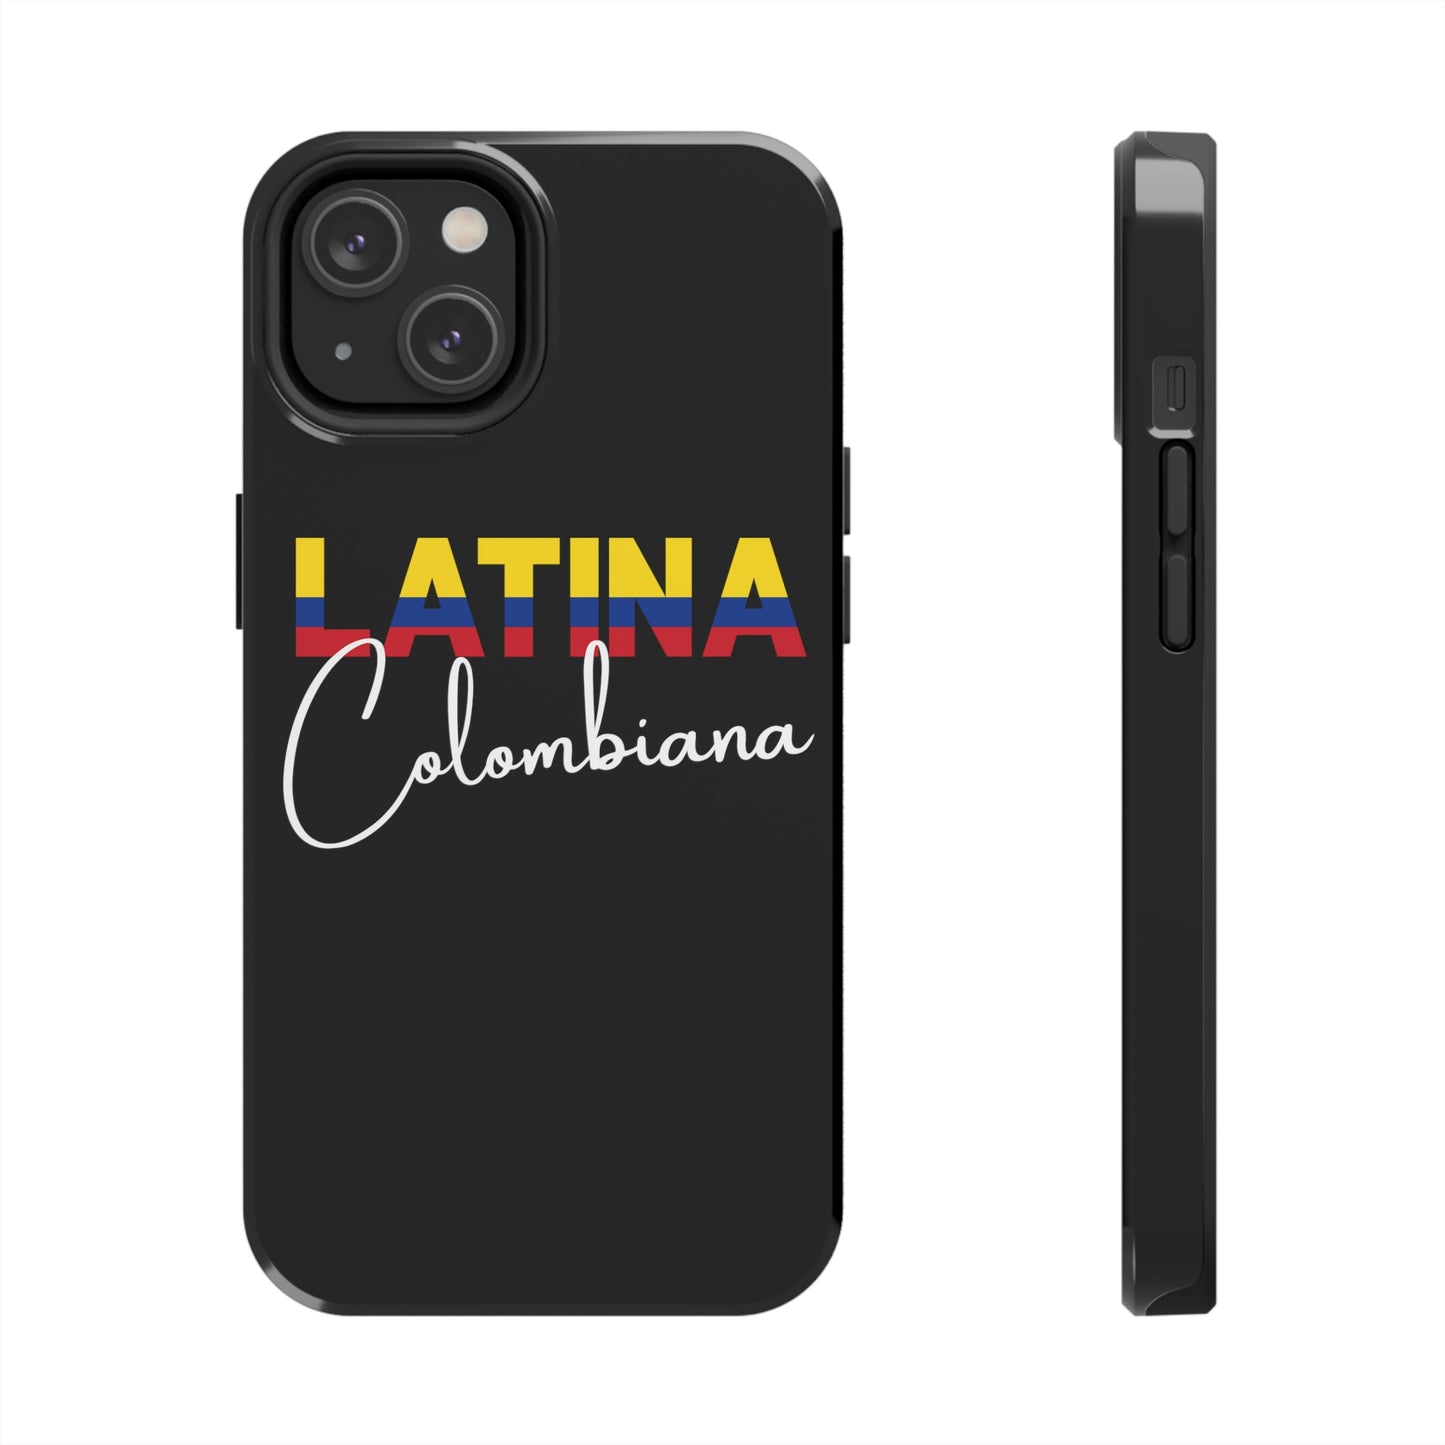 Latina Colombiana, Tough iPhone Case